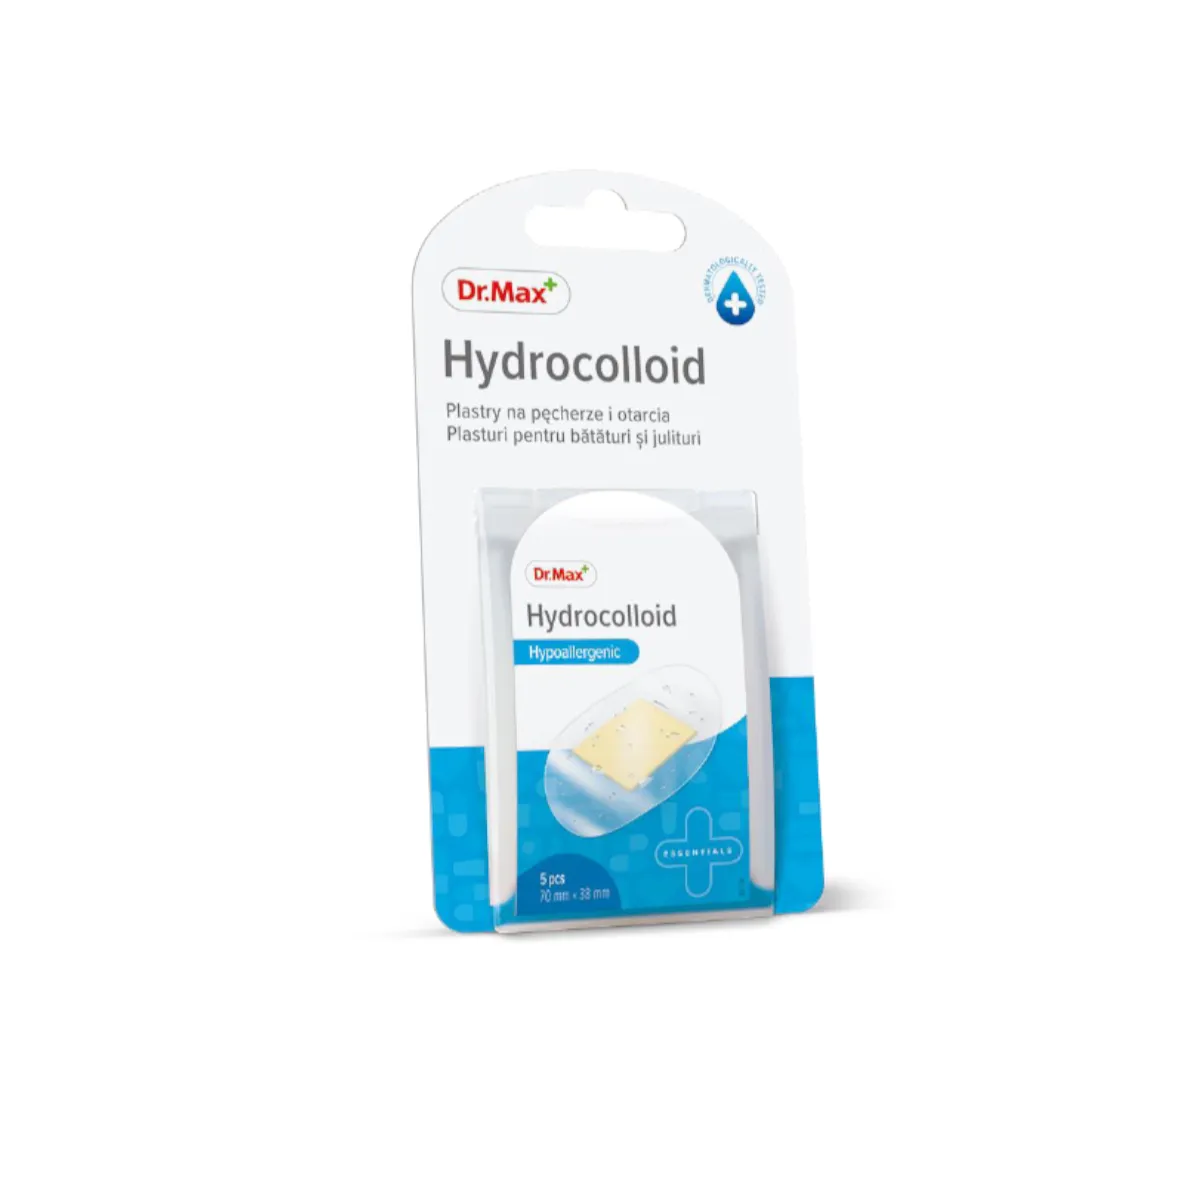 Plaster Hydrocolloid Hypoallergenic Dr.Max, plastry na pęcherze i otarcia, 5 sztuk